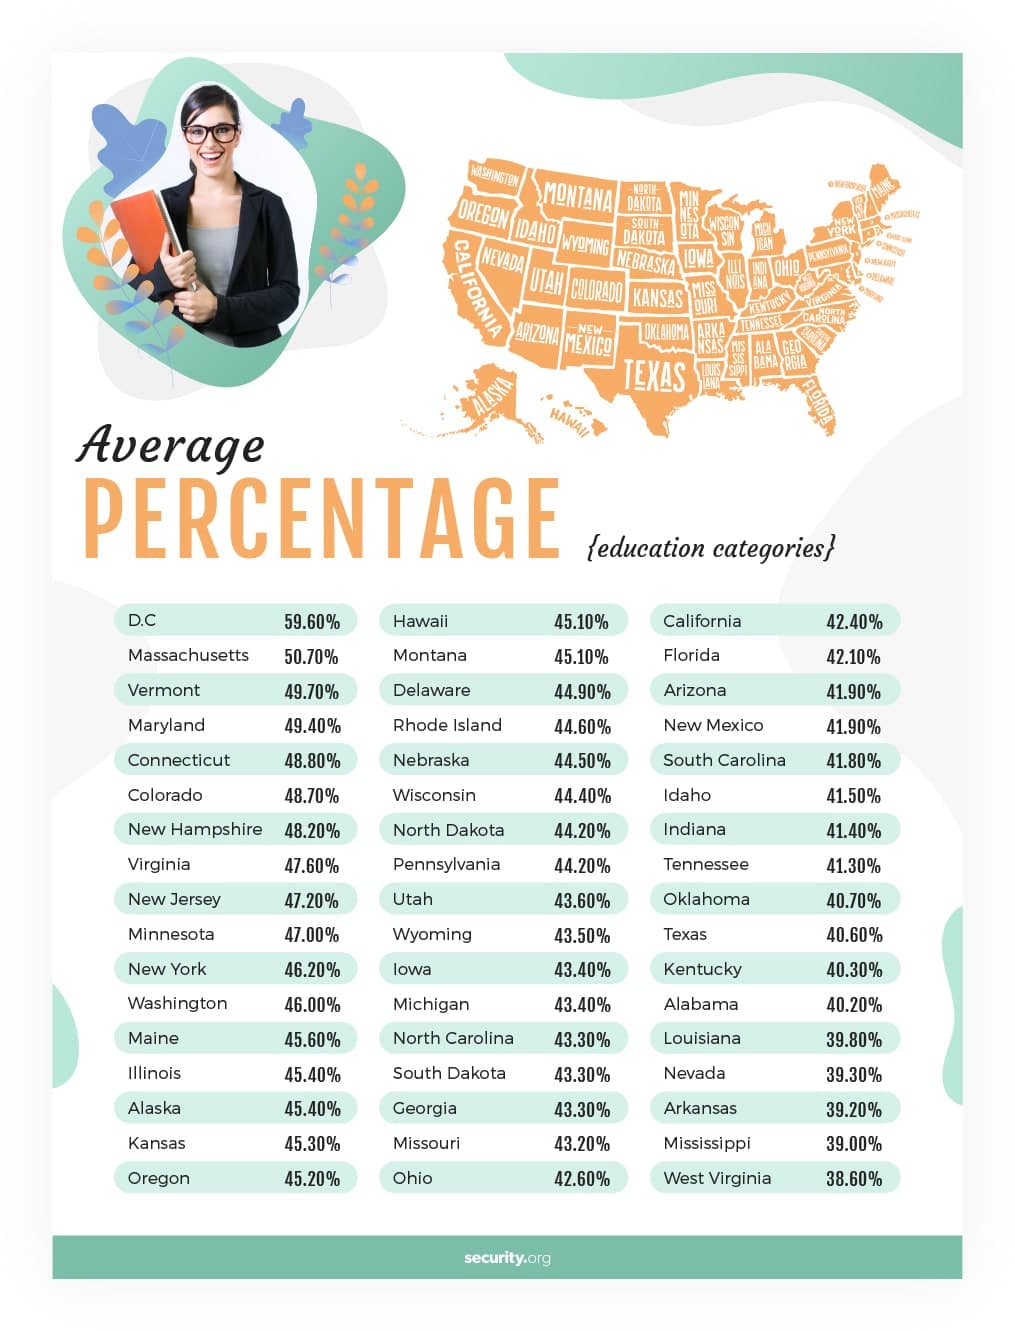 Average percentage education categories